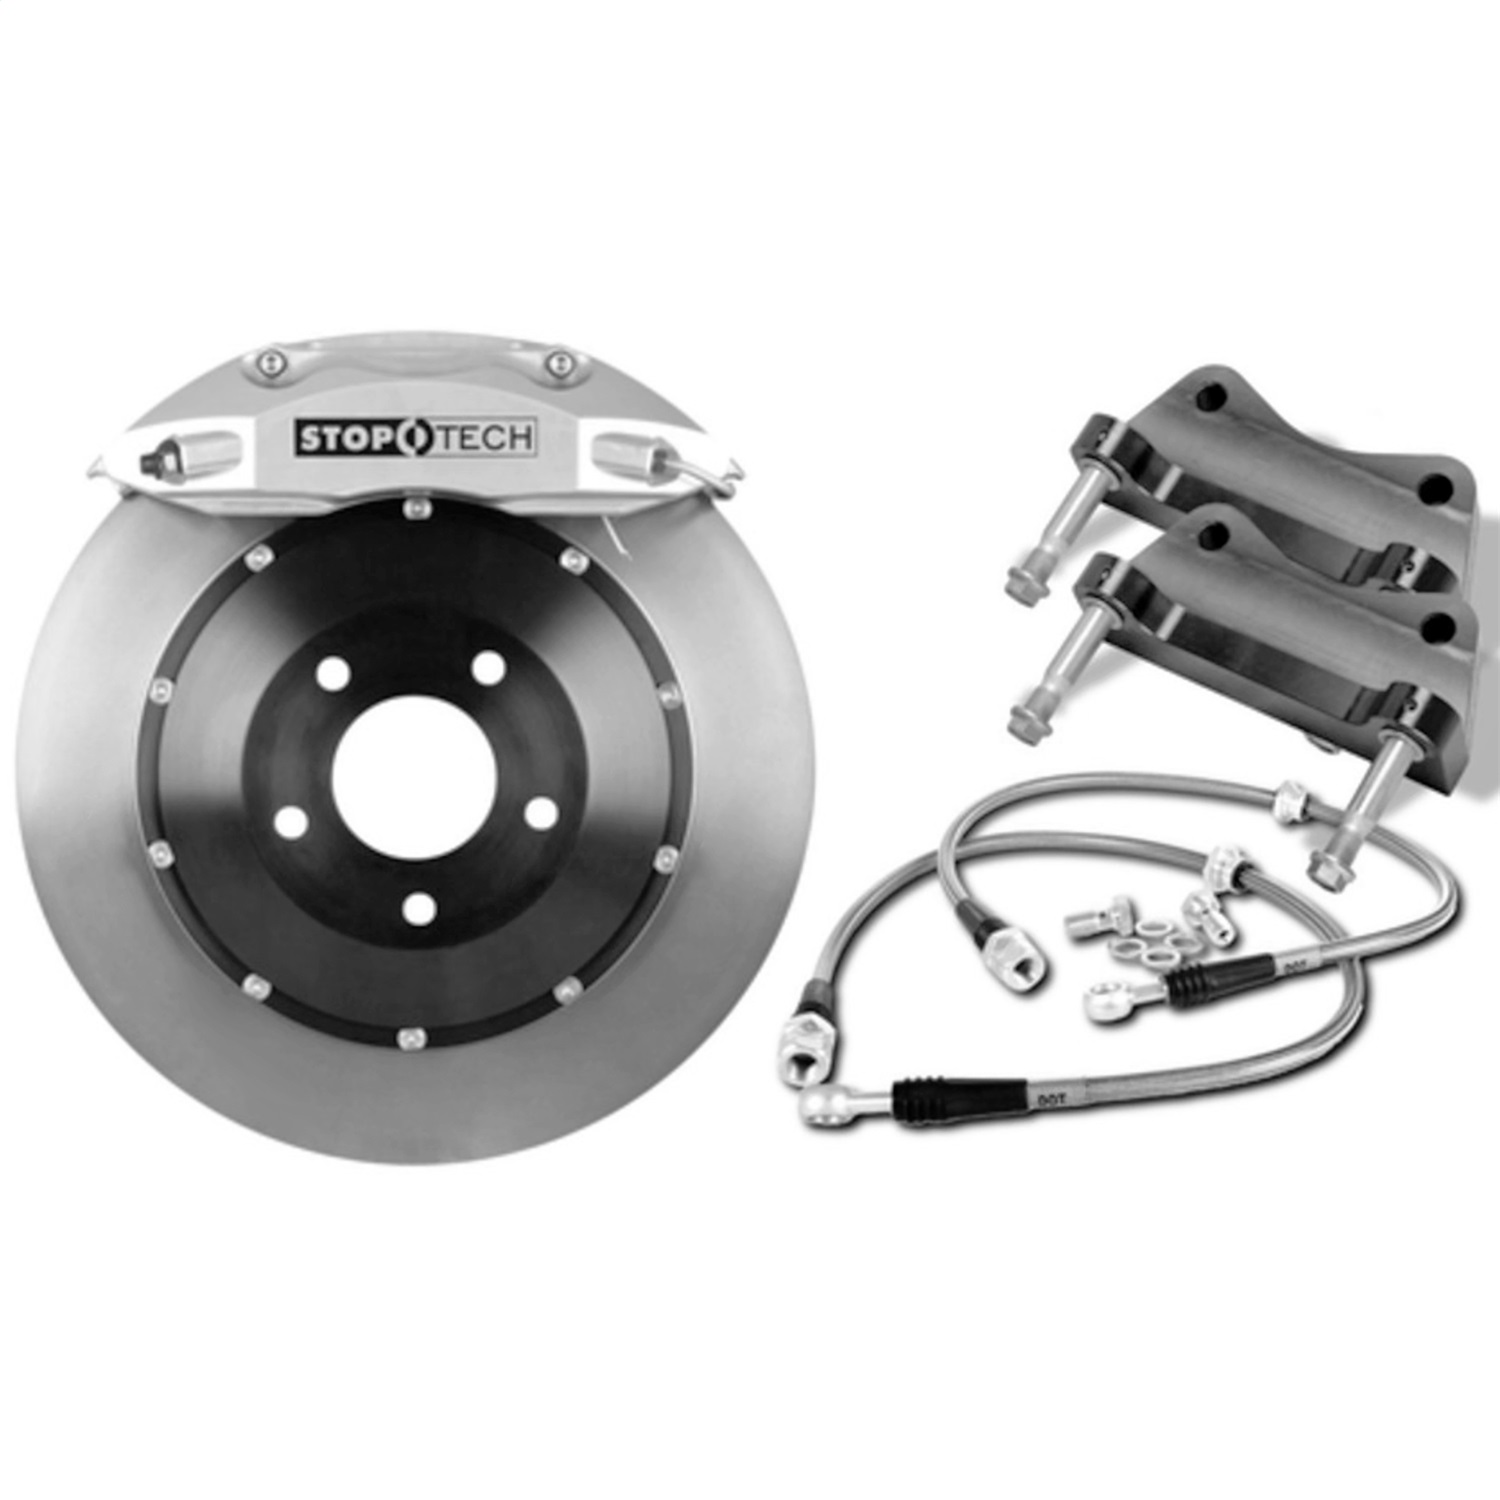 StopTech 83.782.DT00.A1 Big Brake Kit w/2 Piece Rotor Fits 70-89 911